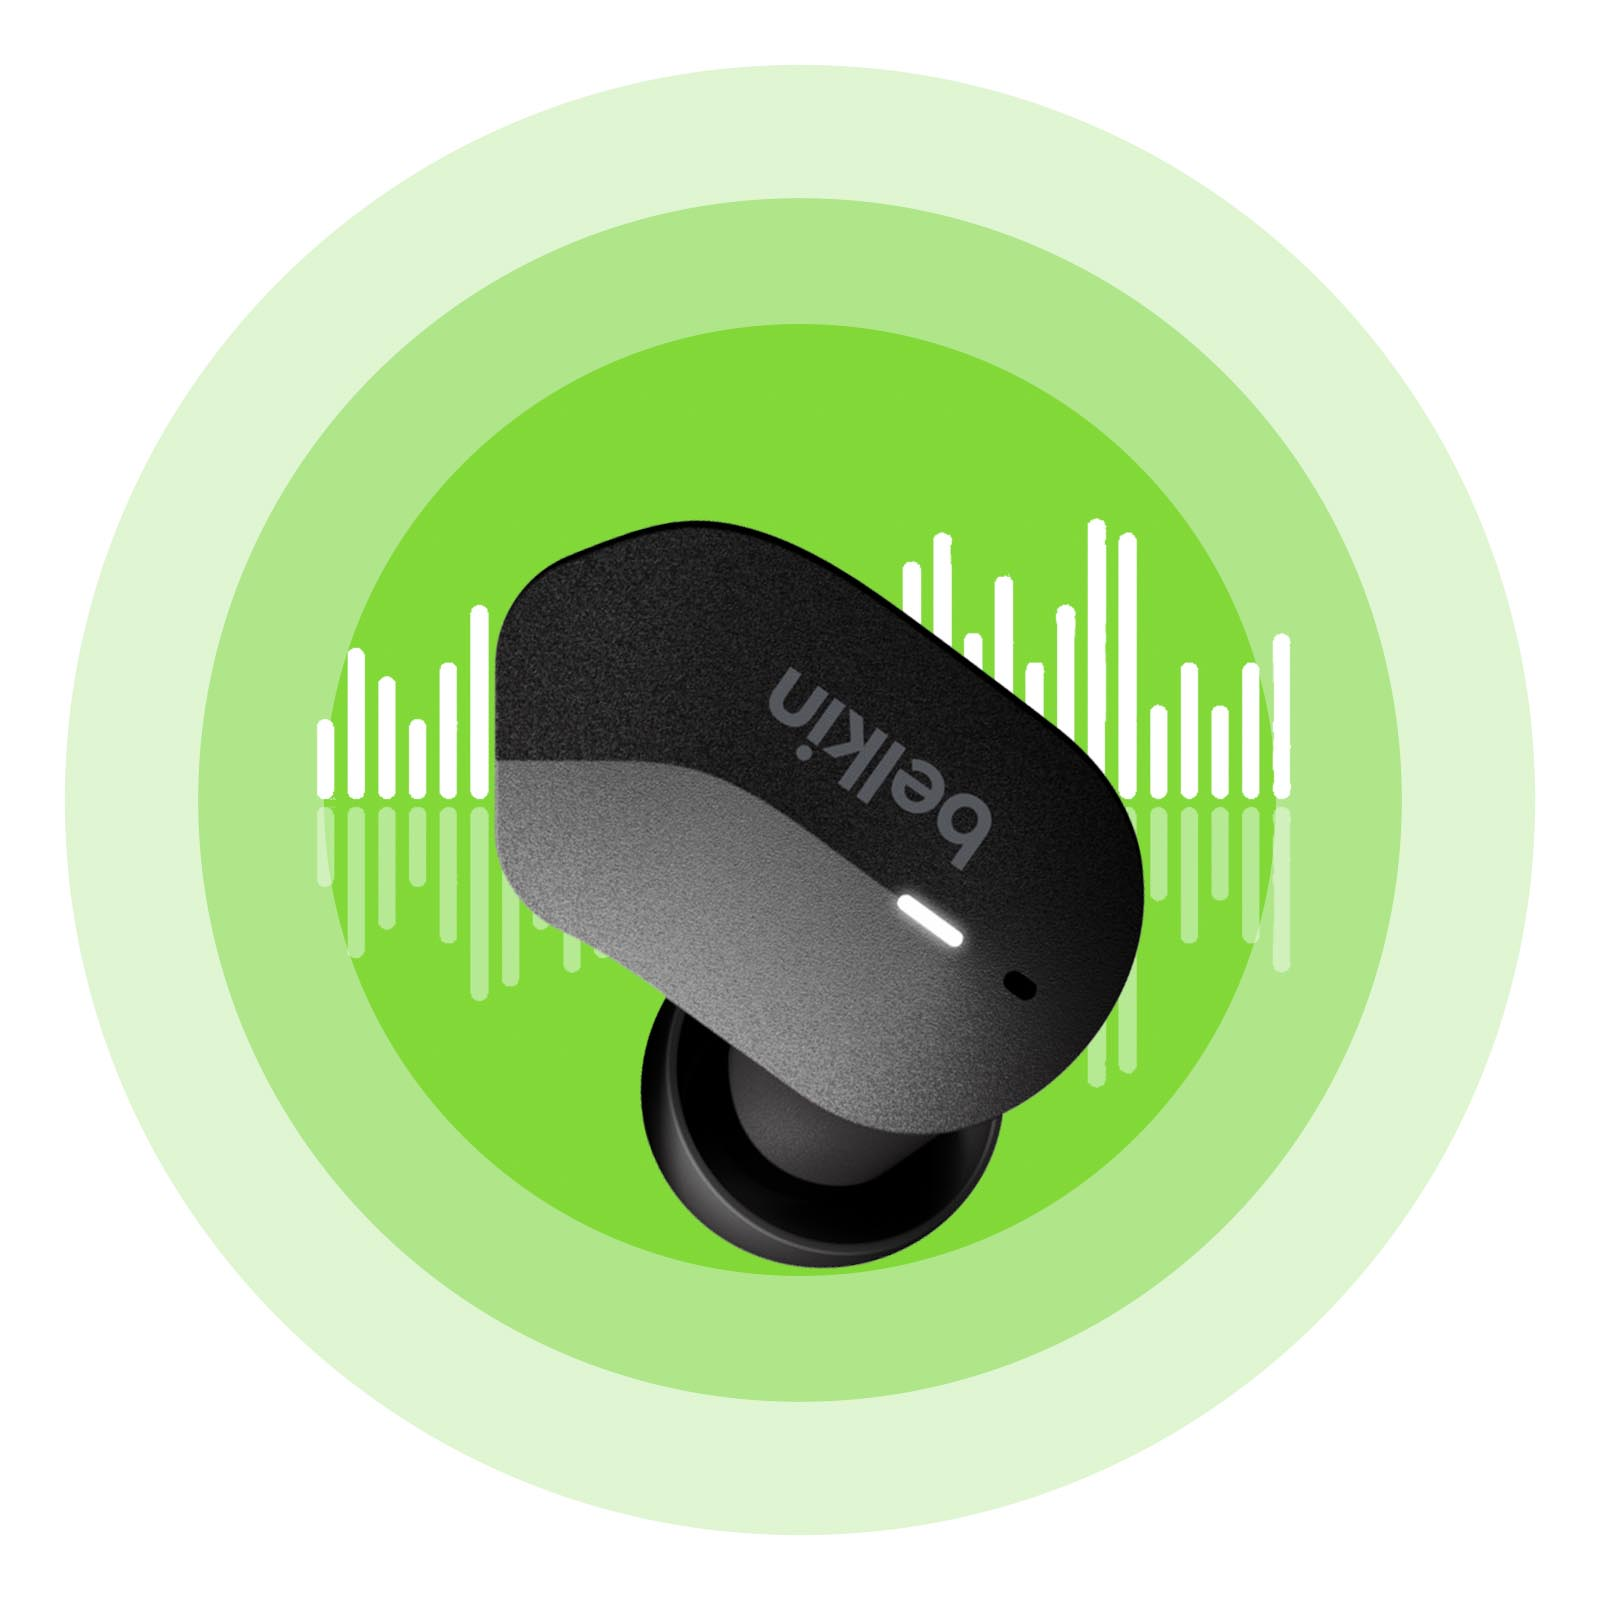 BELKIN SOUNDFORM Bluetooth Sport in-ear Kopfhörer Bluetooth-Kopfhörer